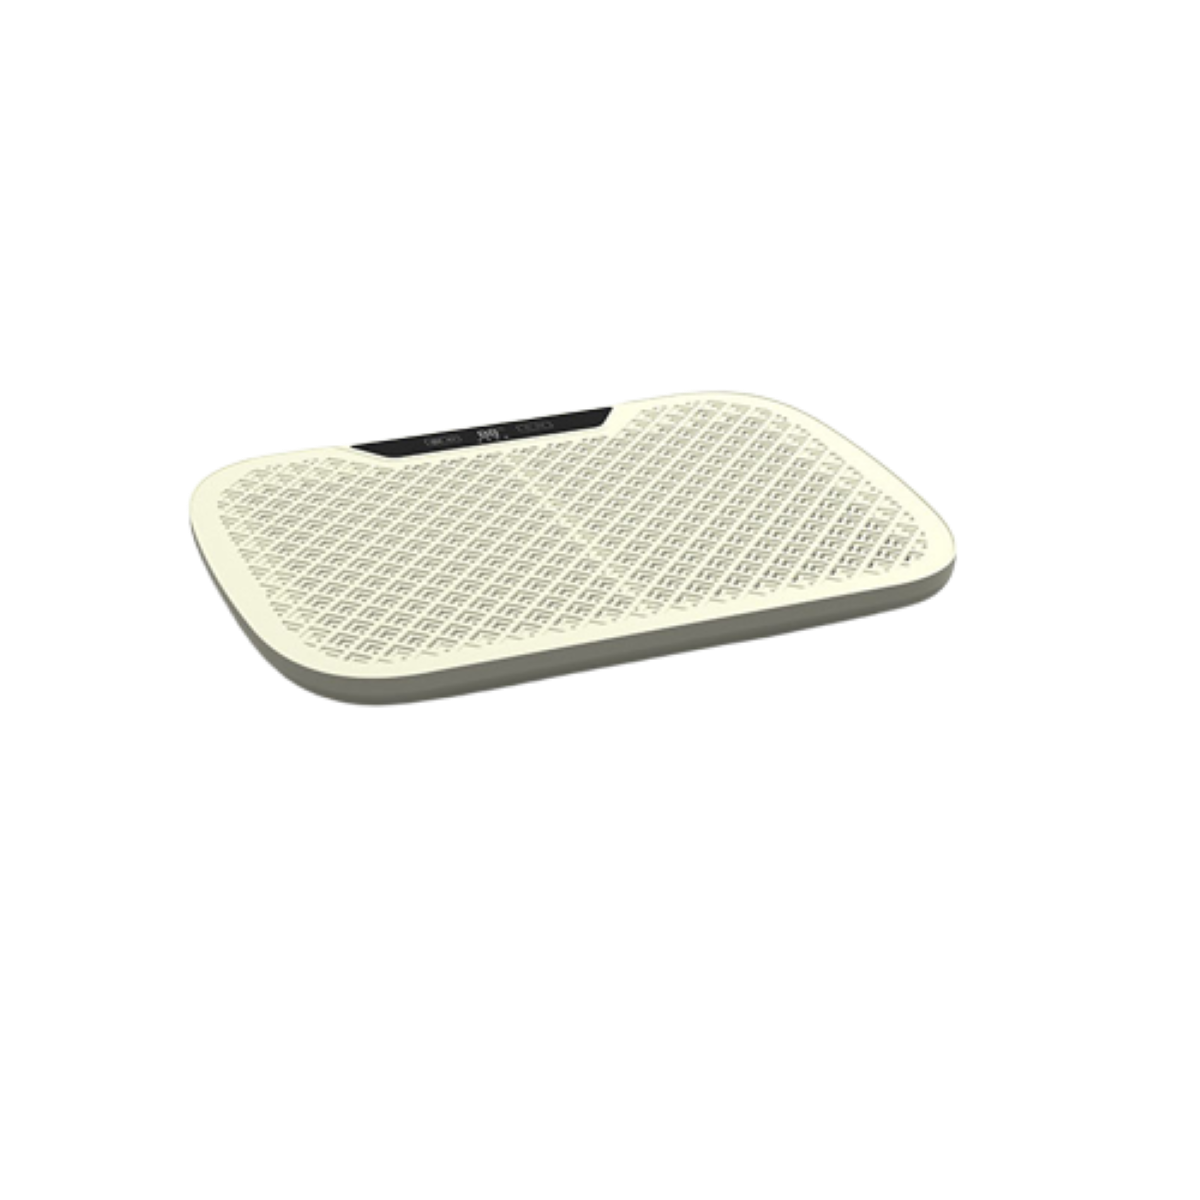 Fußwärmer Foot LACAMAX Graphene Standard vierstufige Warmer - Temperaturregelung niedriger Energieverbrauch,